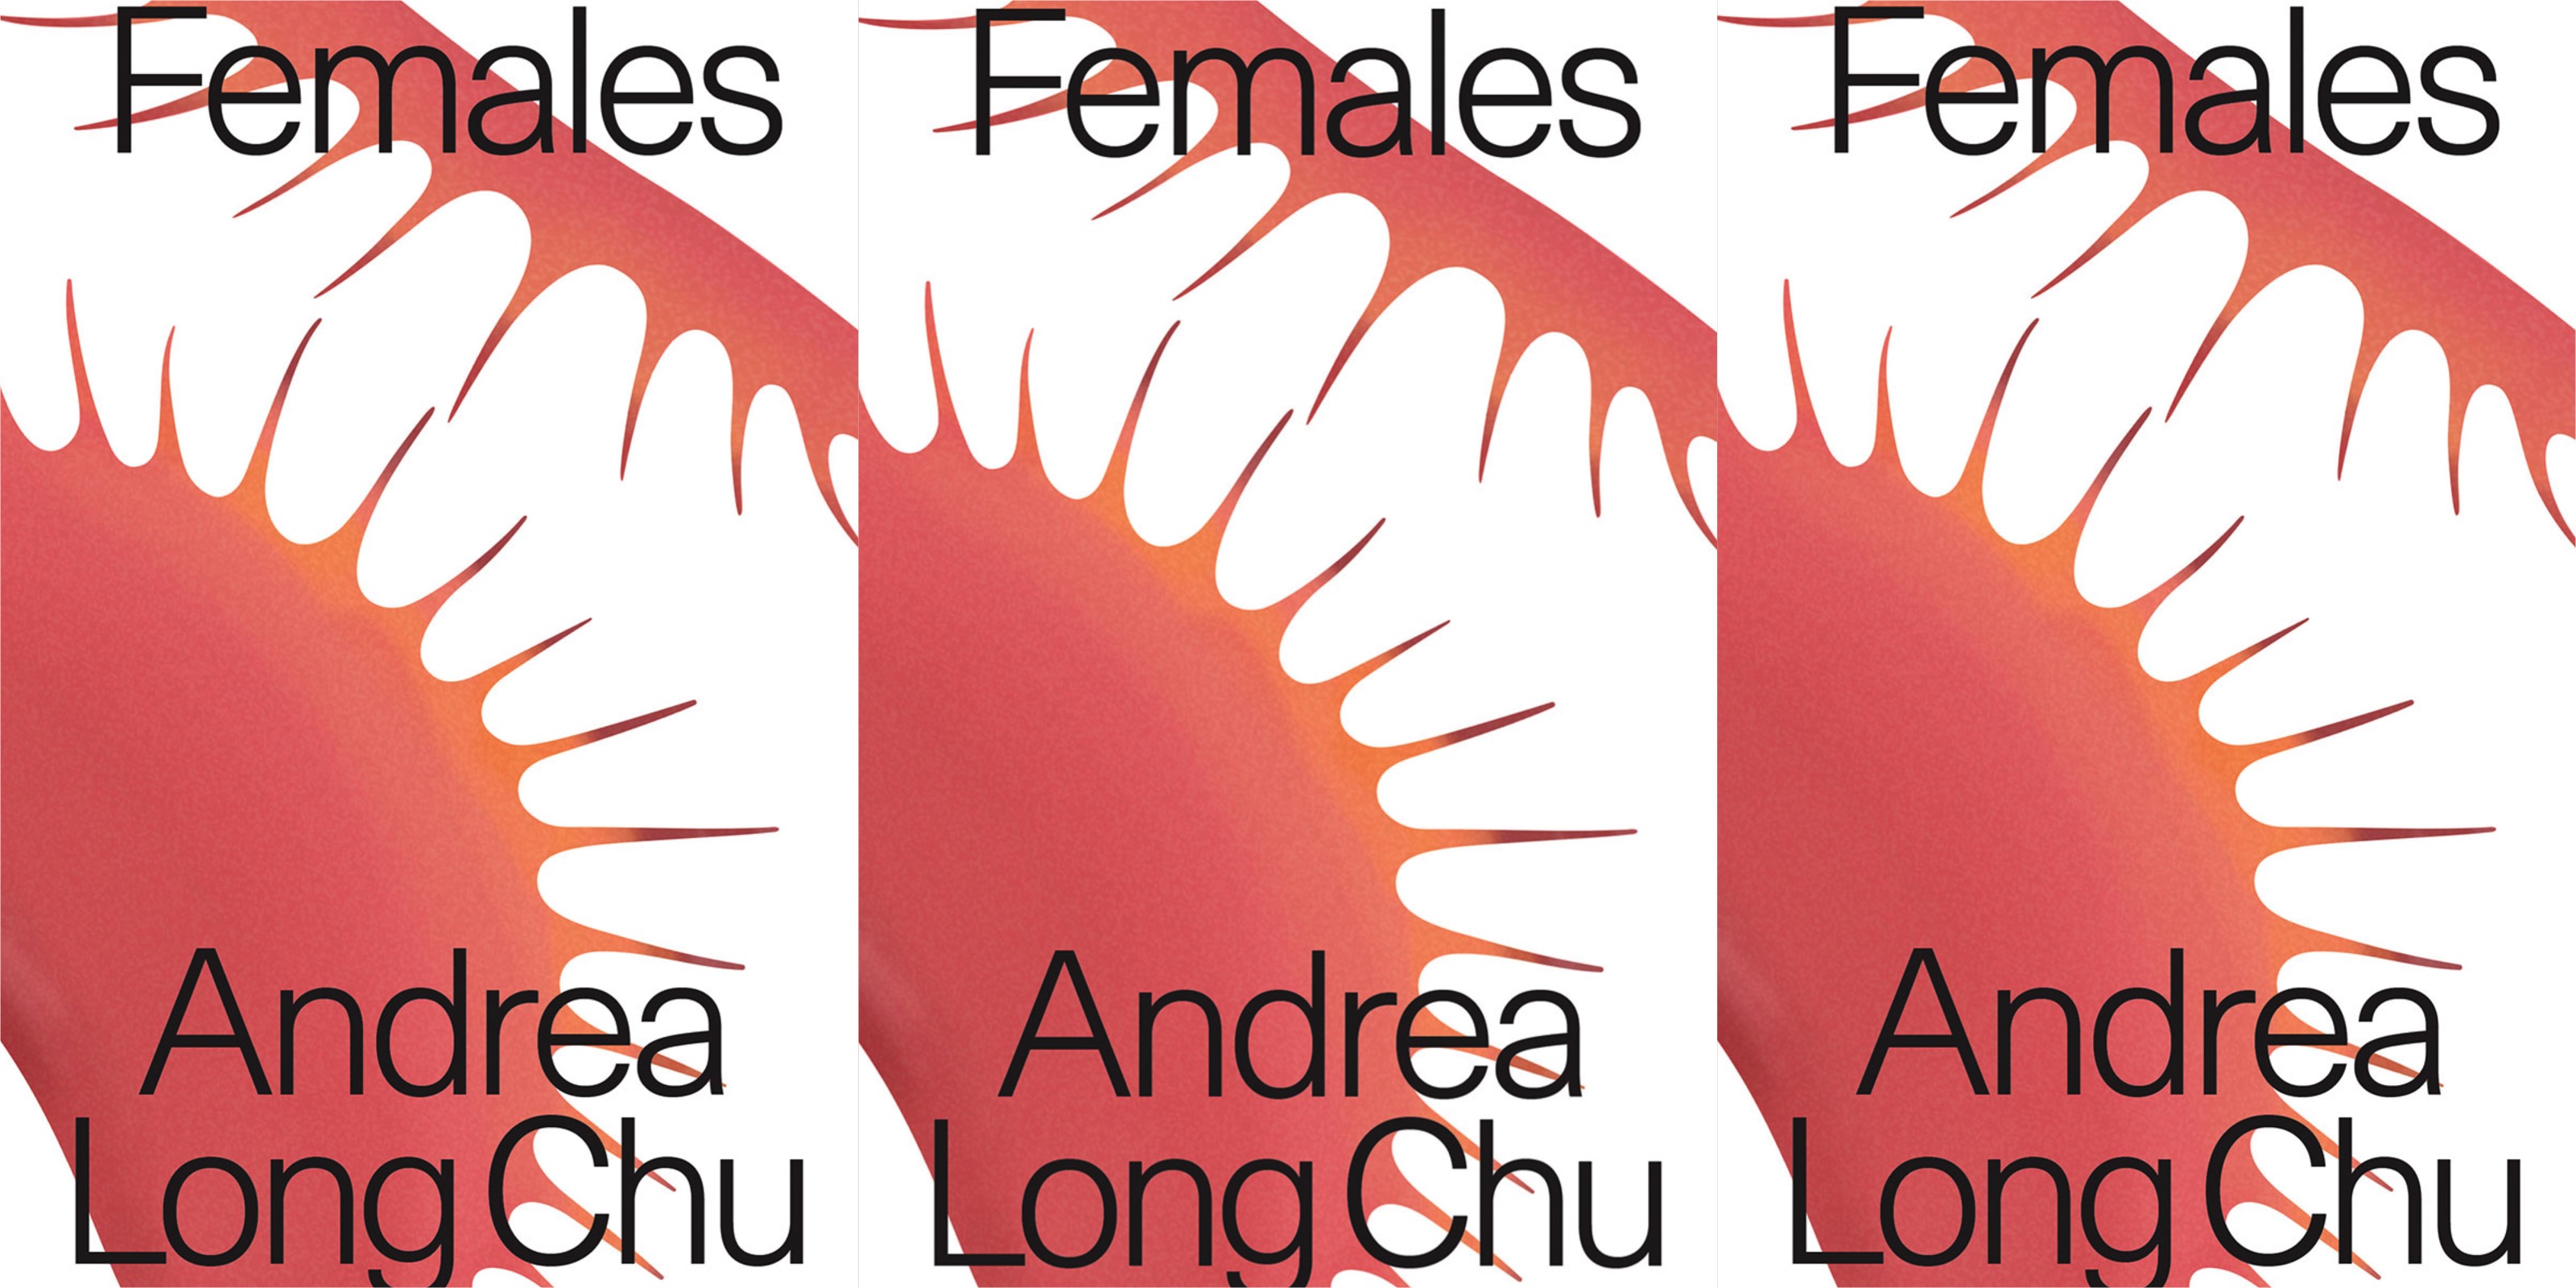 Gigi Gorgeous Nude Transexual - Andrea Long Chu's \